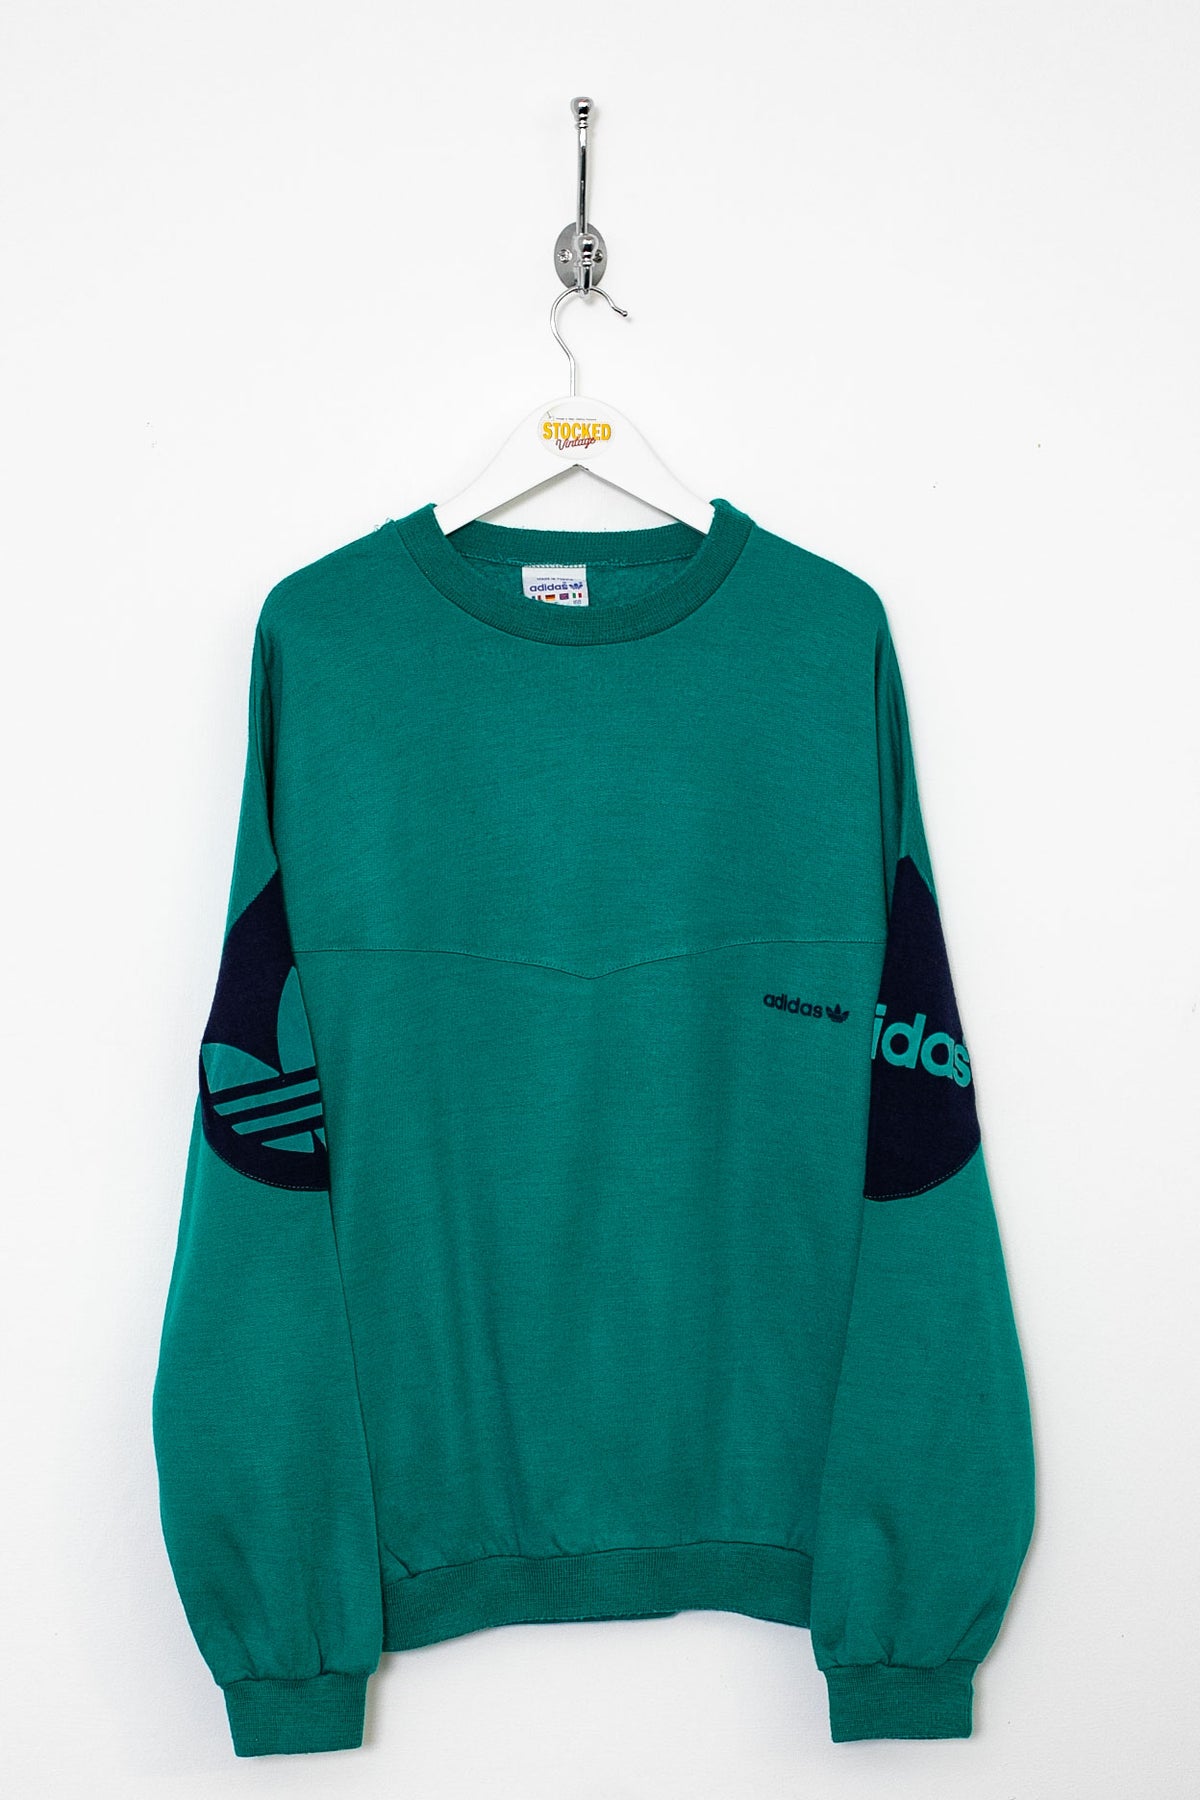 80s Adidas Sweatshirt (M)